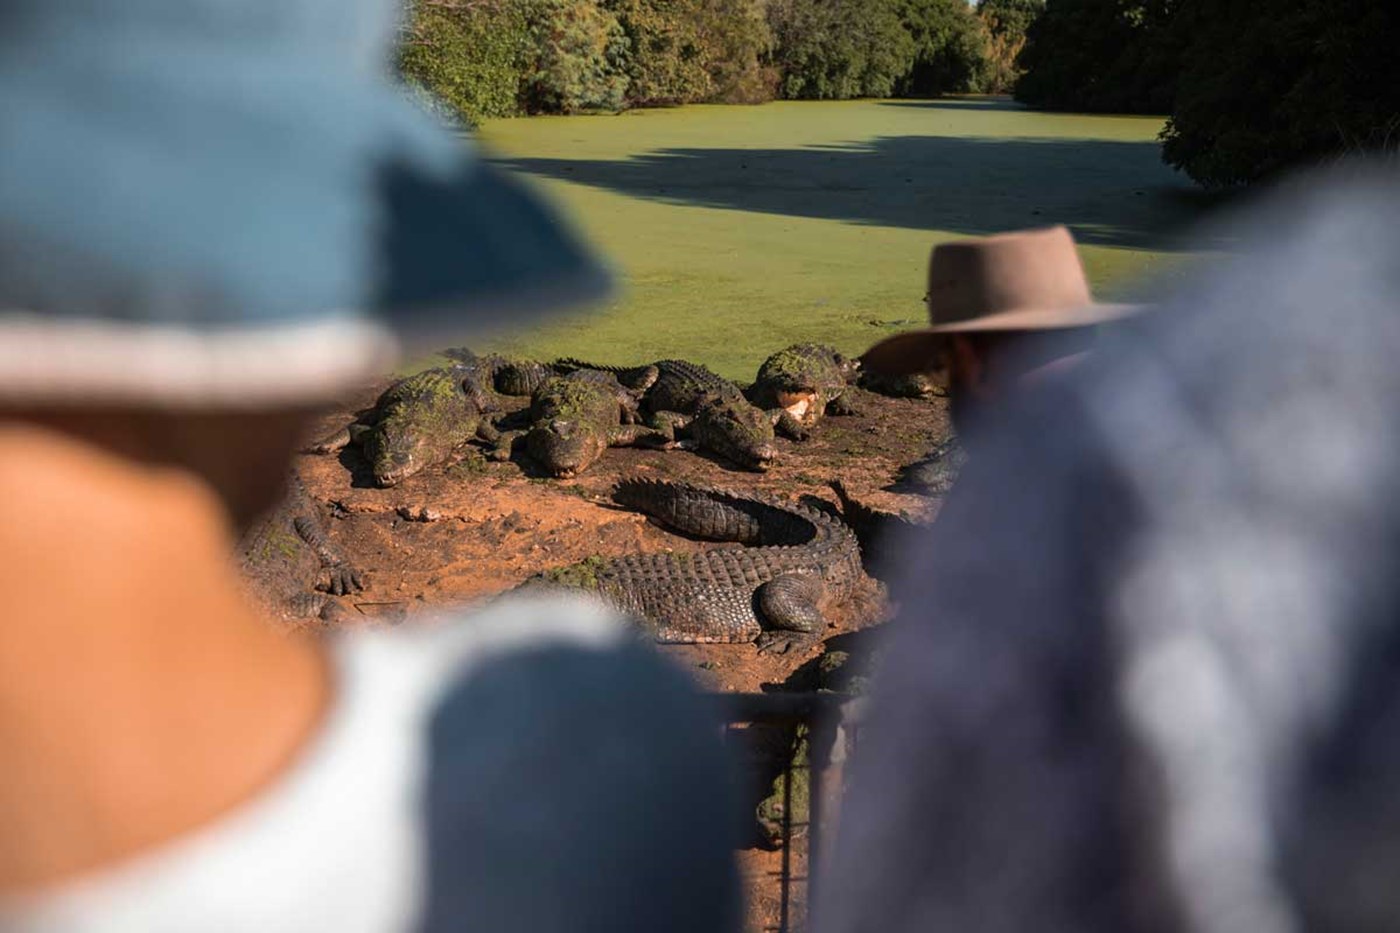 Malcolm Douglas Crocodile Park